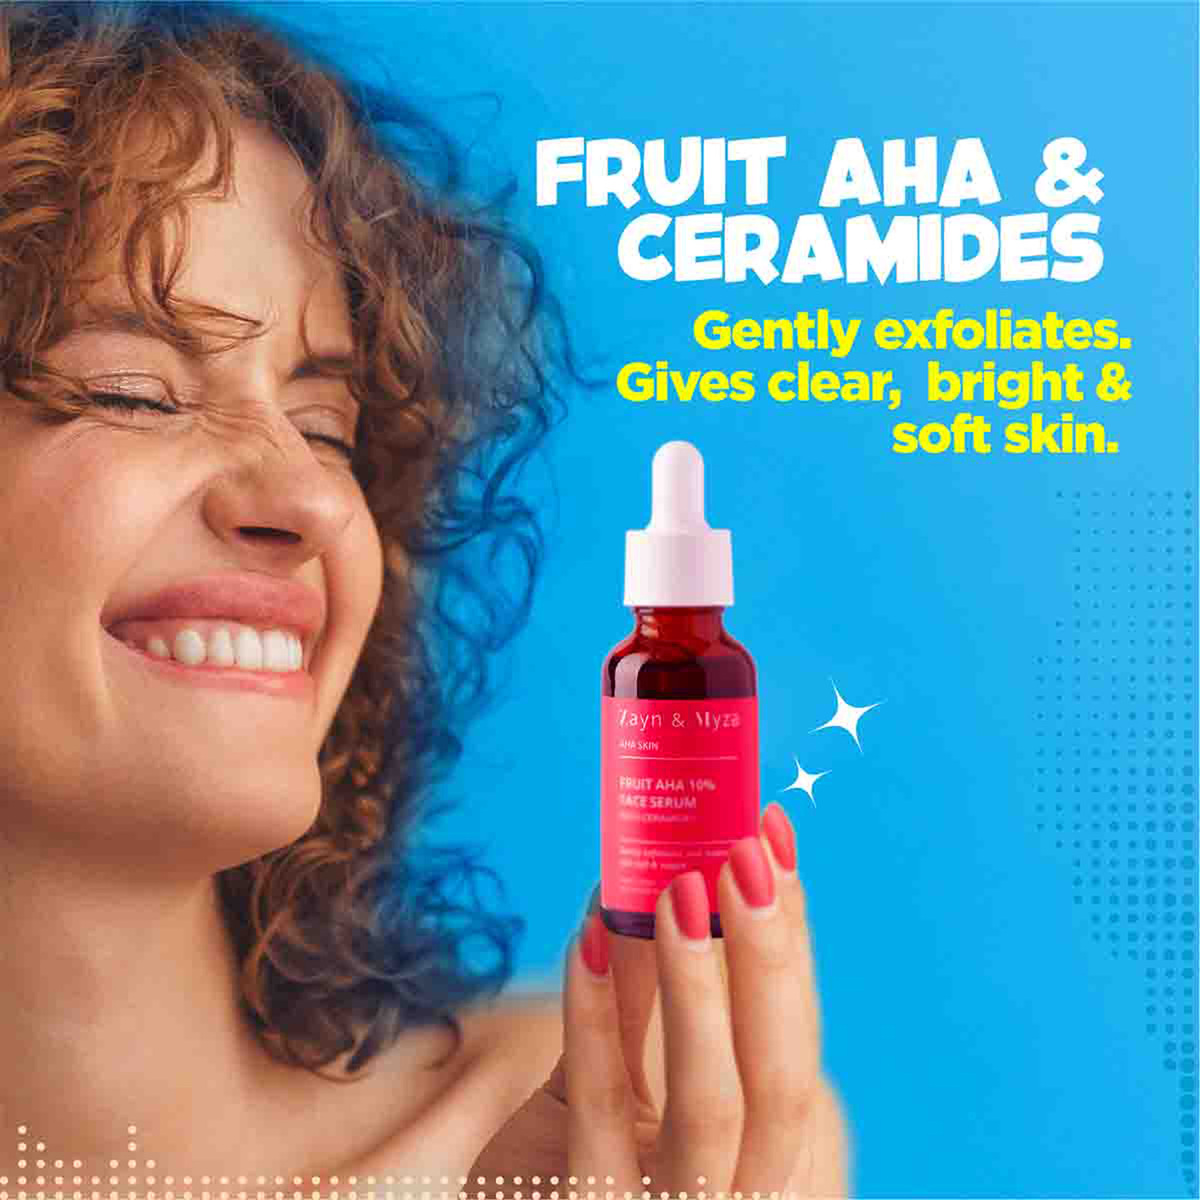 Zayn & Myza Skin Fruit AHA 10 % Face Serum with Ceramide, 30 ml